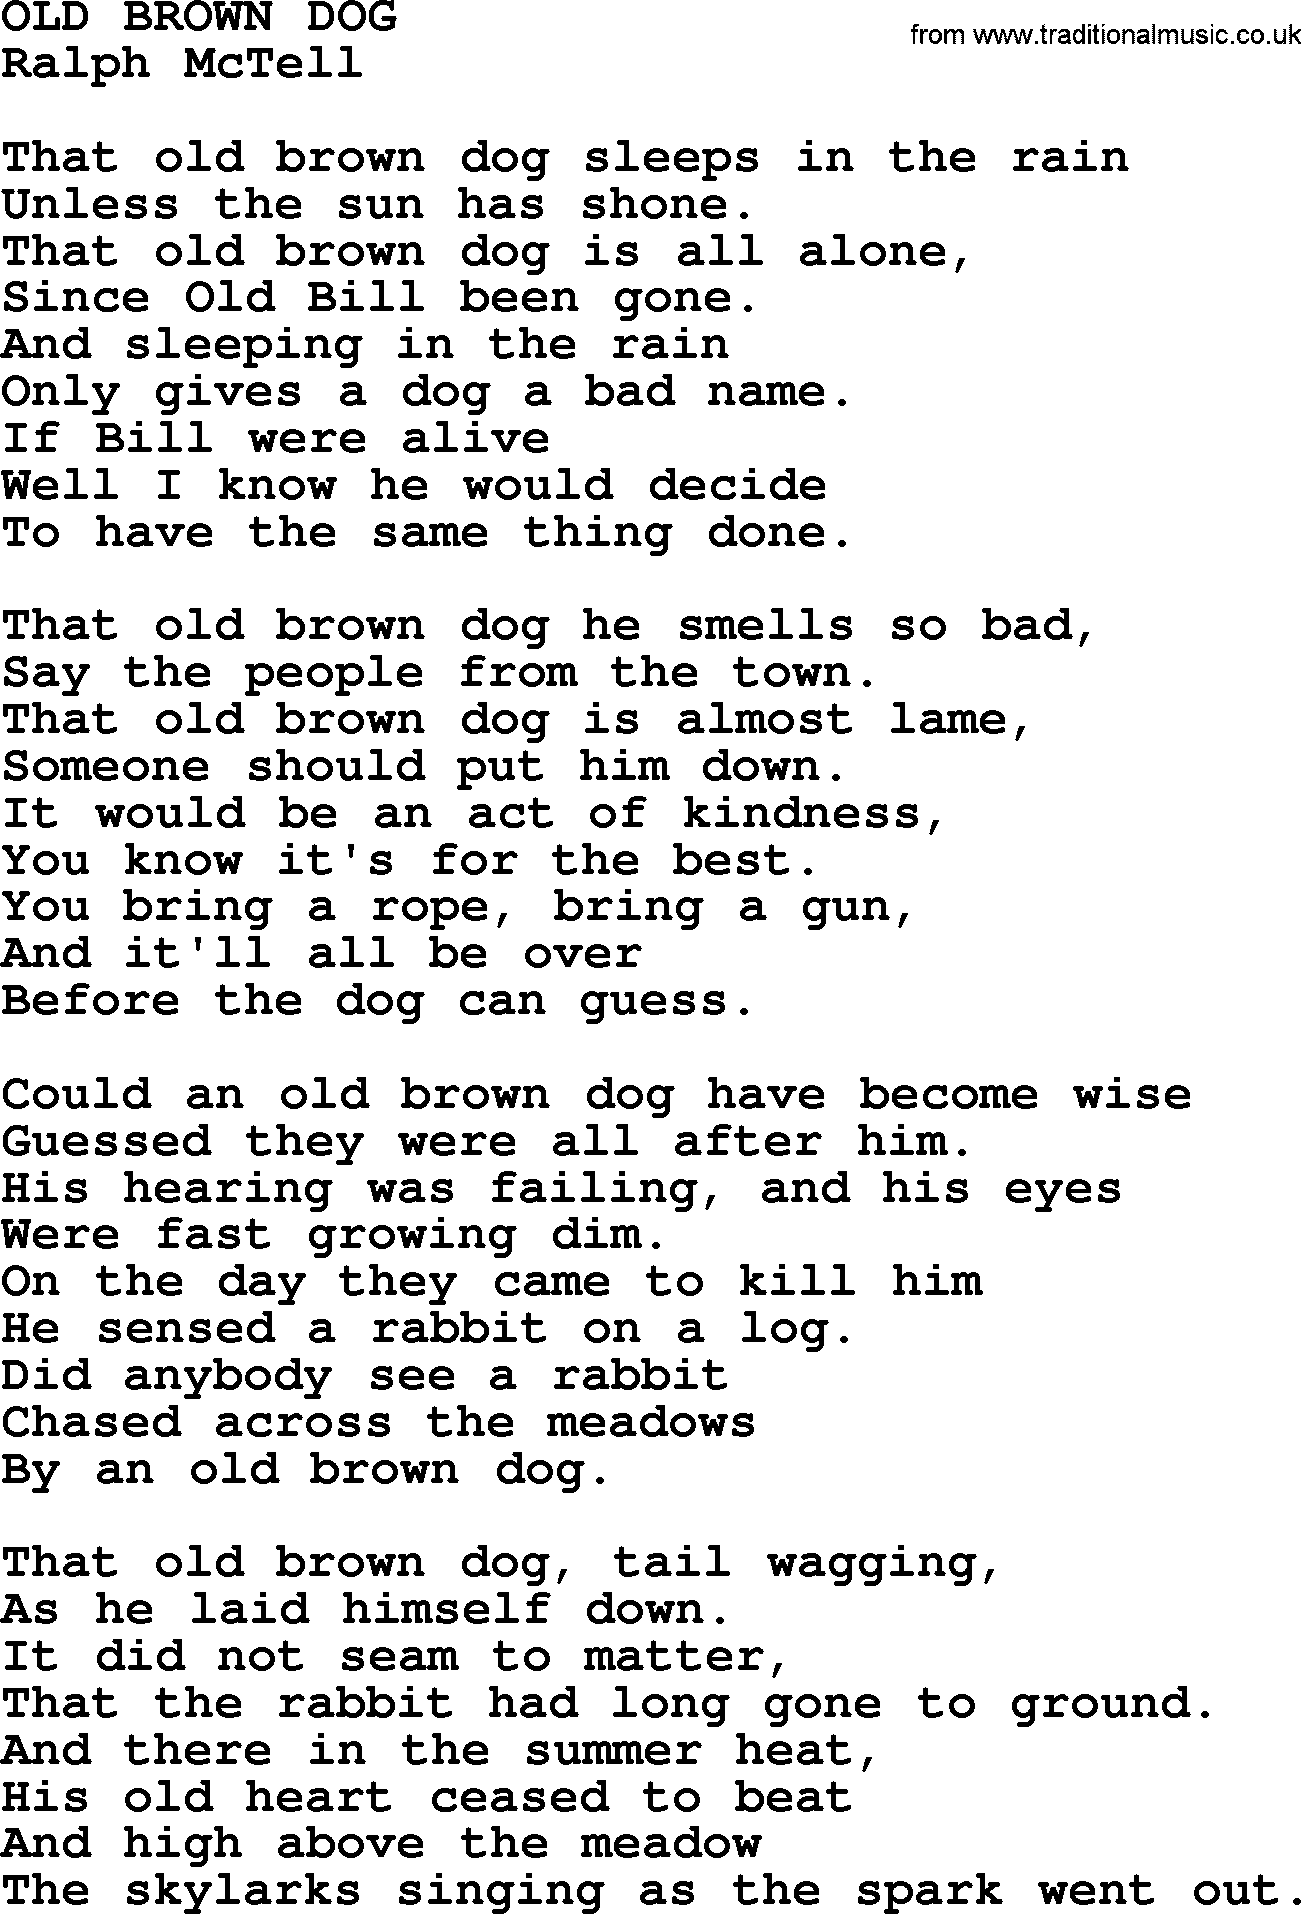 Ralph McTell Song: Old Brown Dog, lyrics